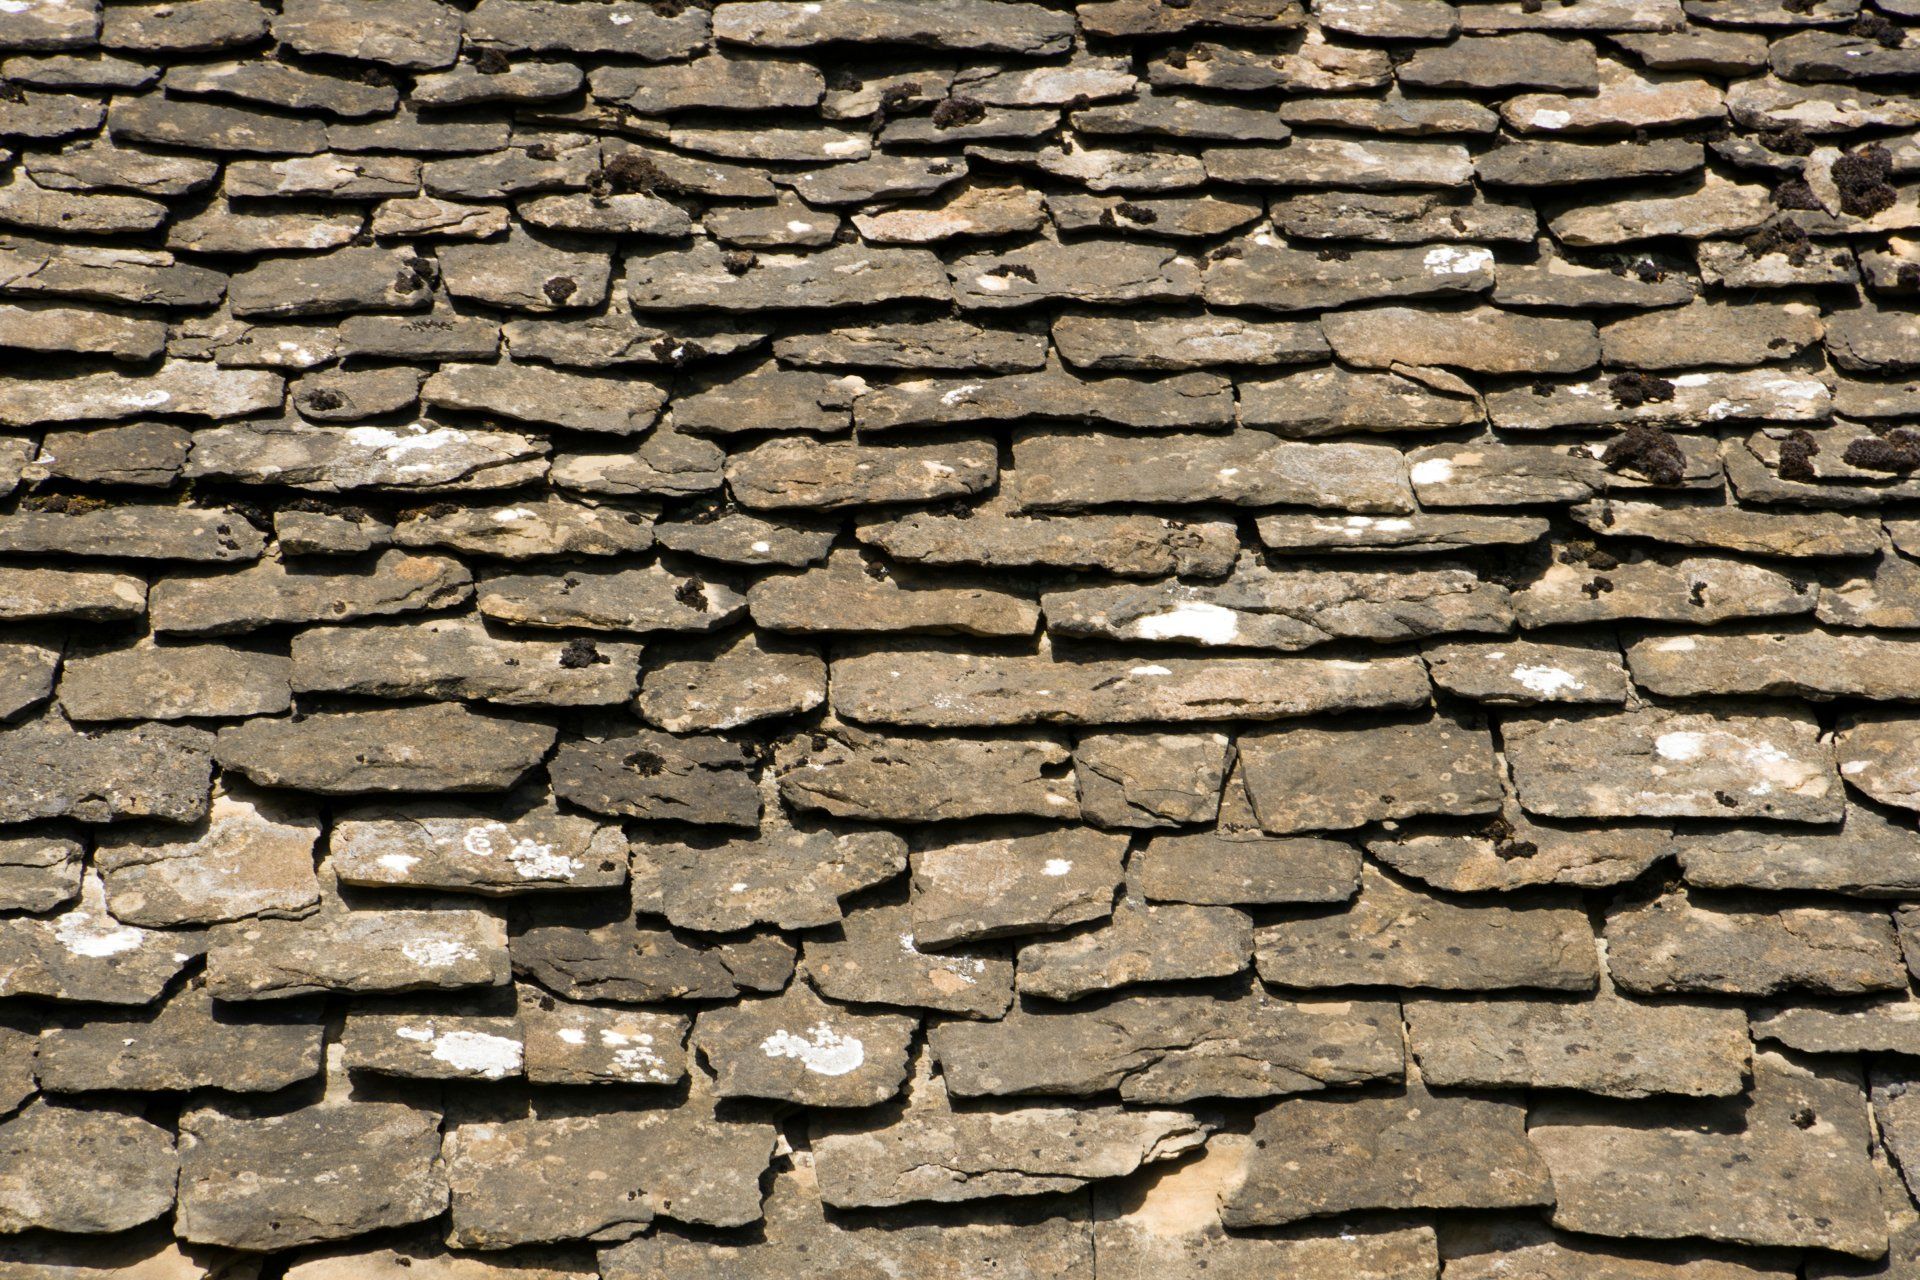 A close up of a roof made of bricks